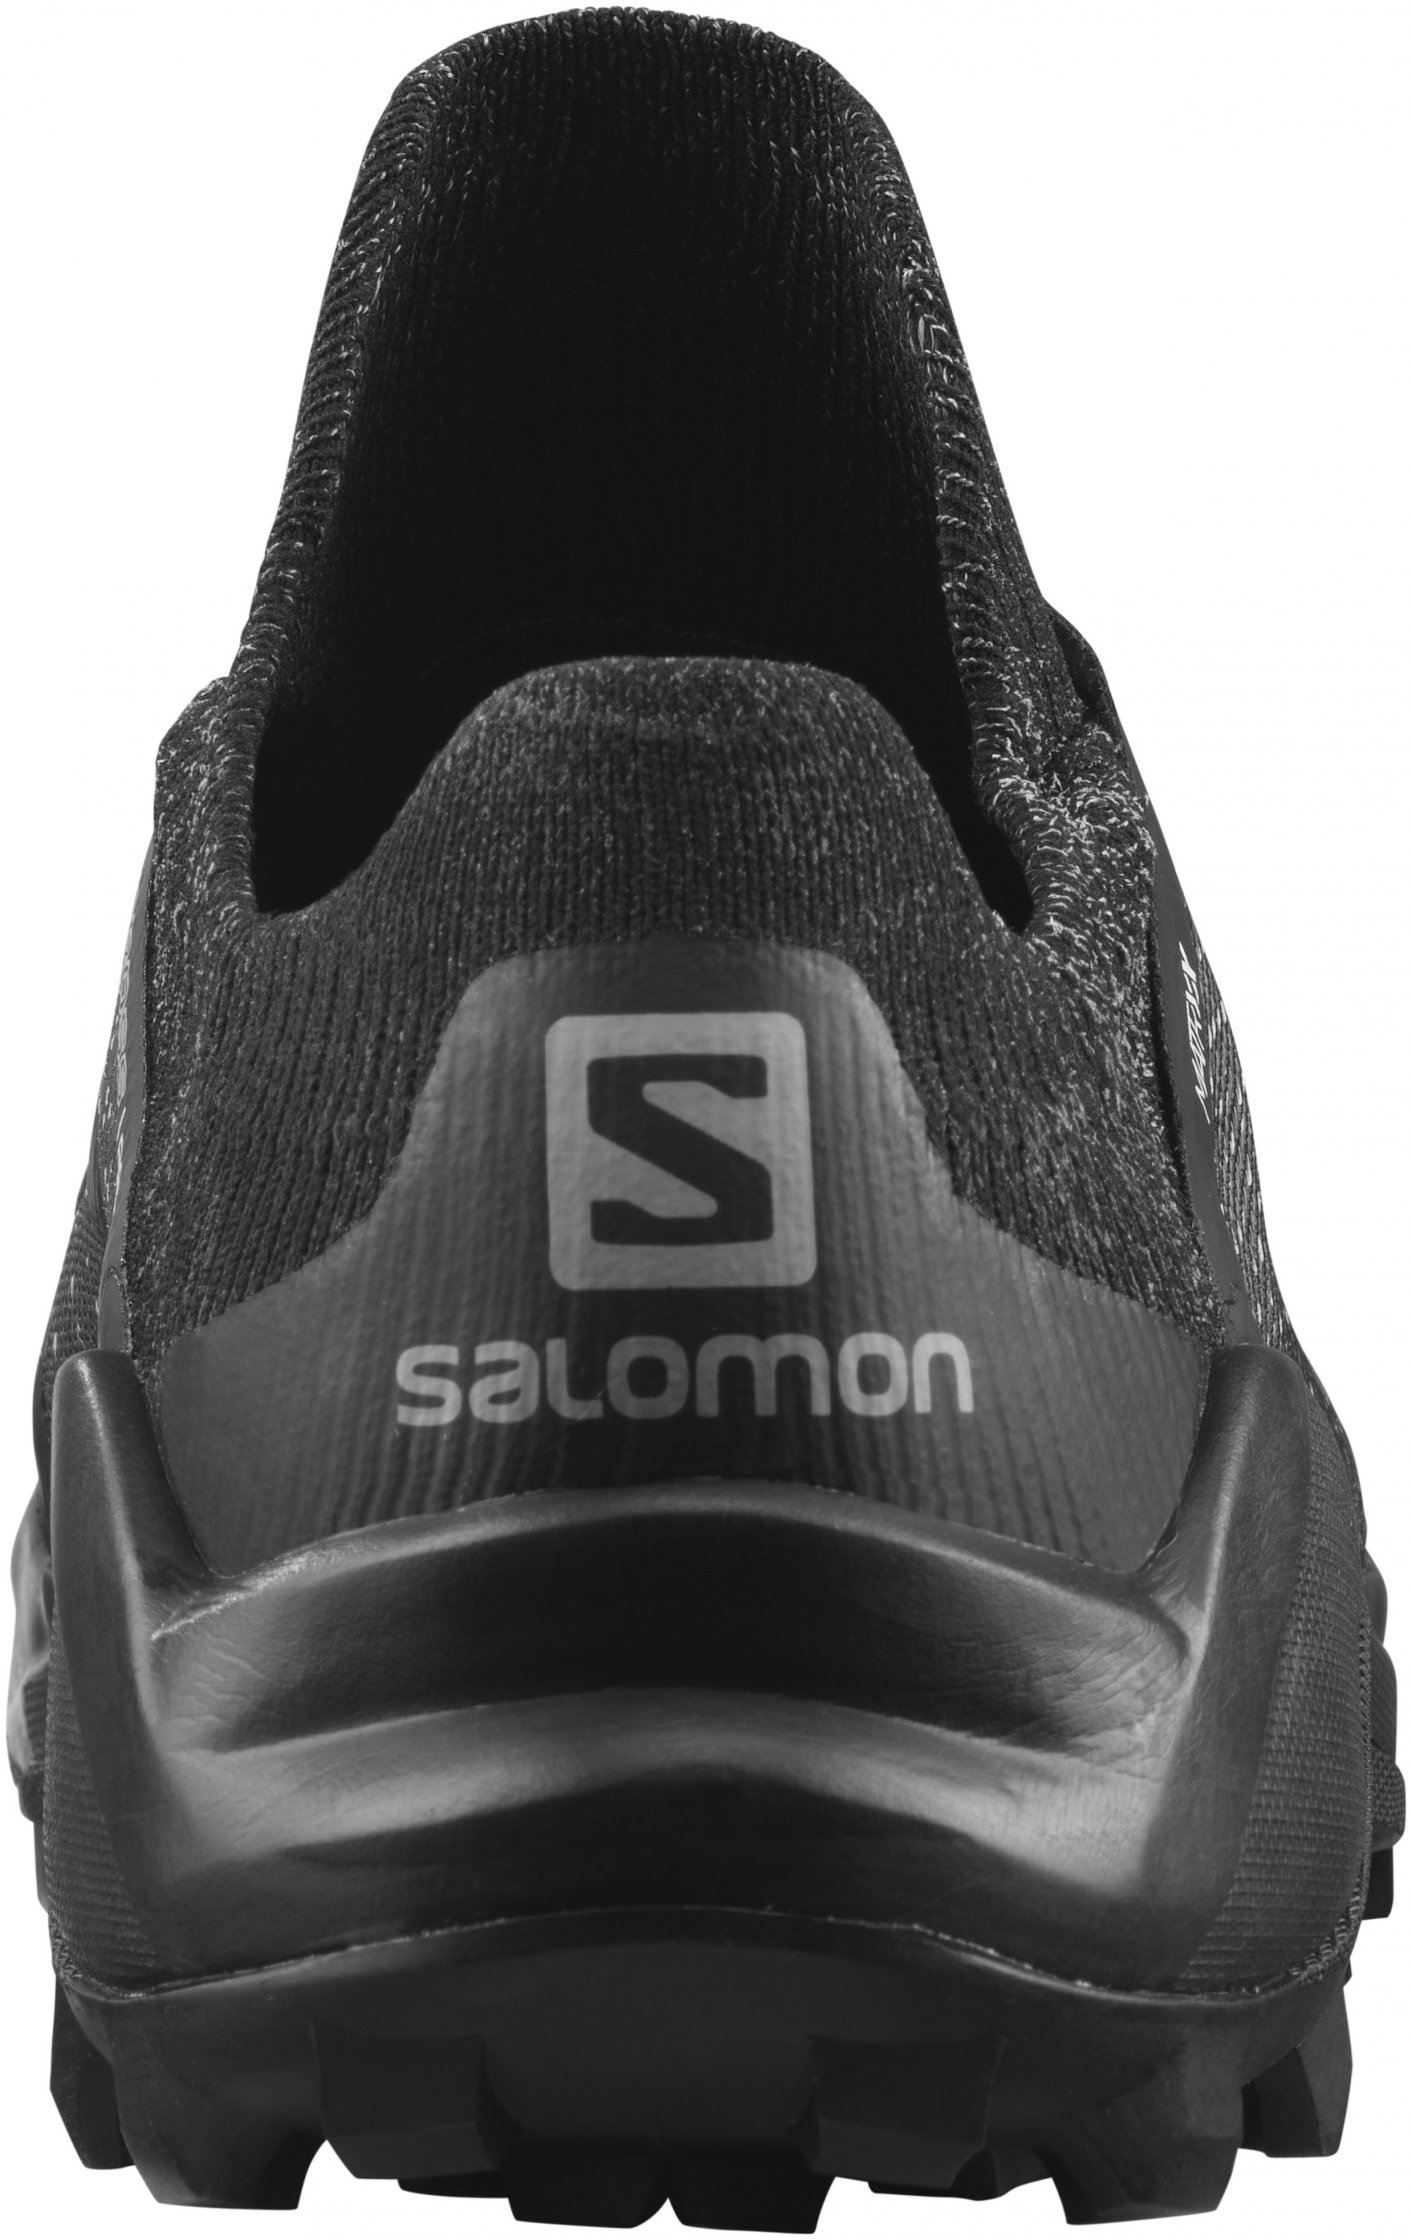 Infecteren Soeverein programma Salomon Cross Pro Shoe